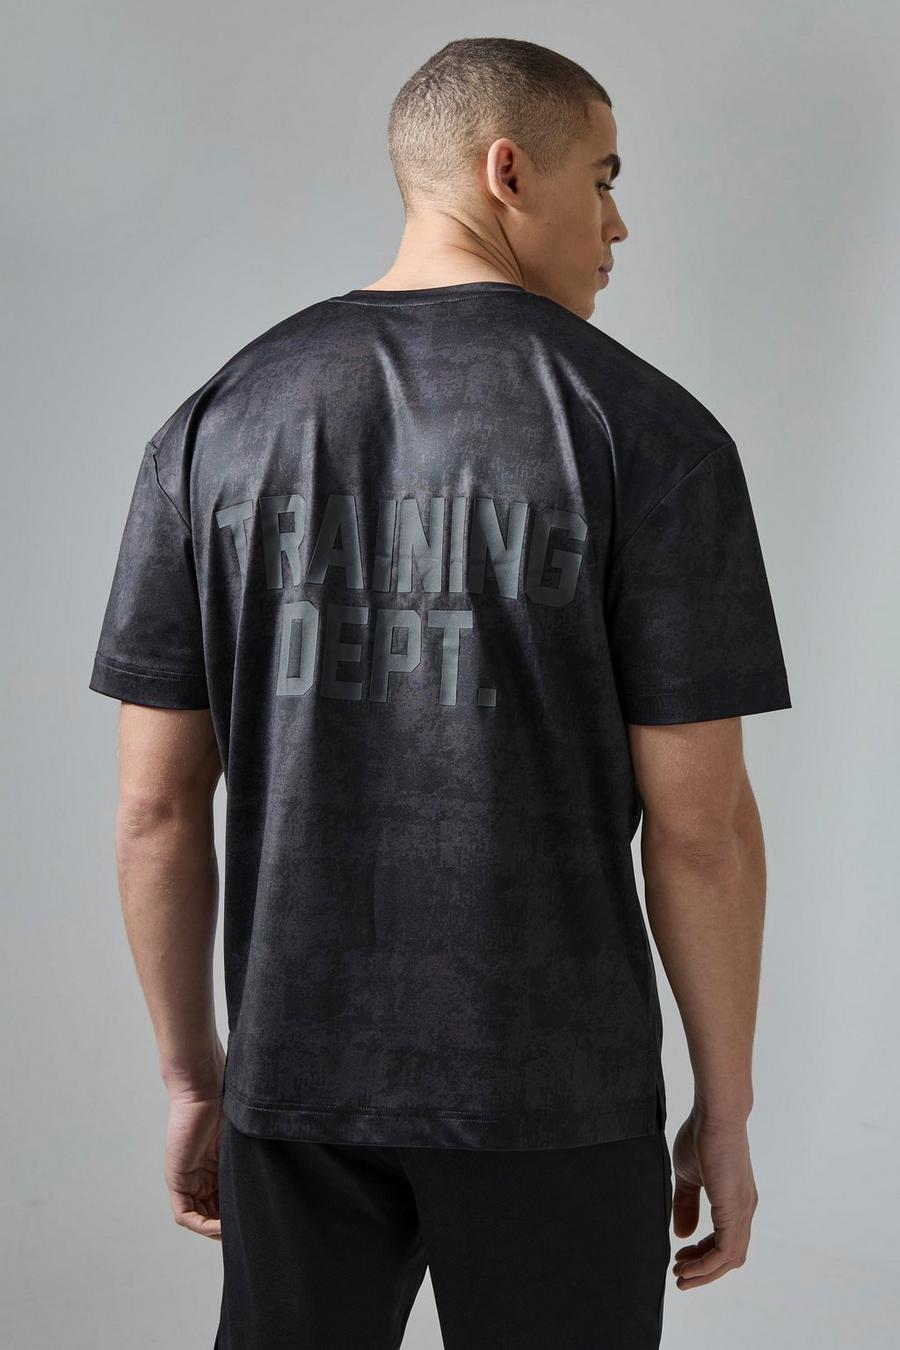 Oversize Camouflage T-Shirt mit Active Training Dept Print, Black